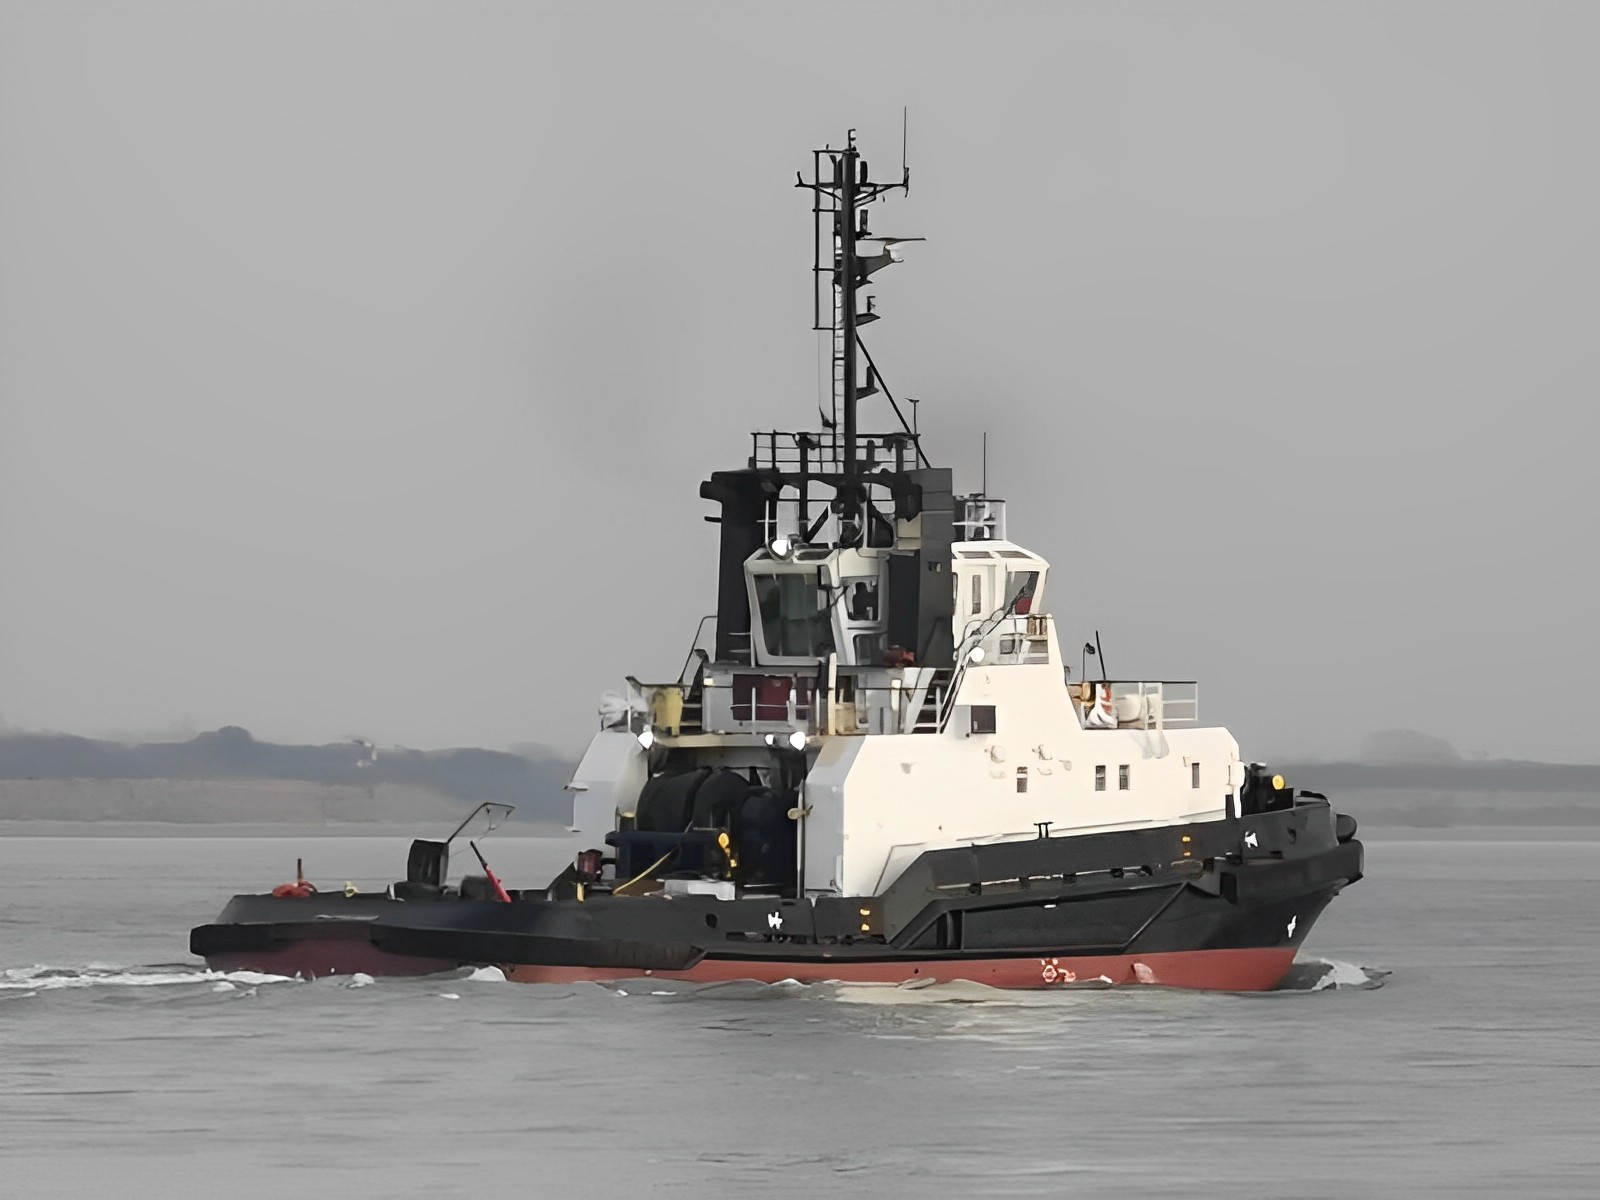 ASD tugboat for charter, 50 tons bollard pull